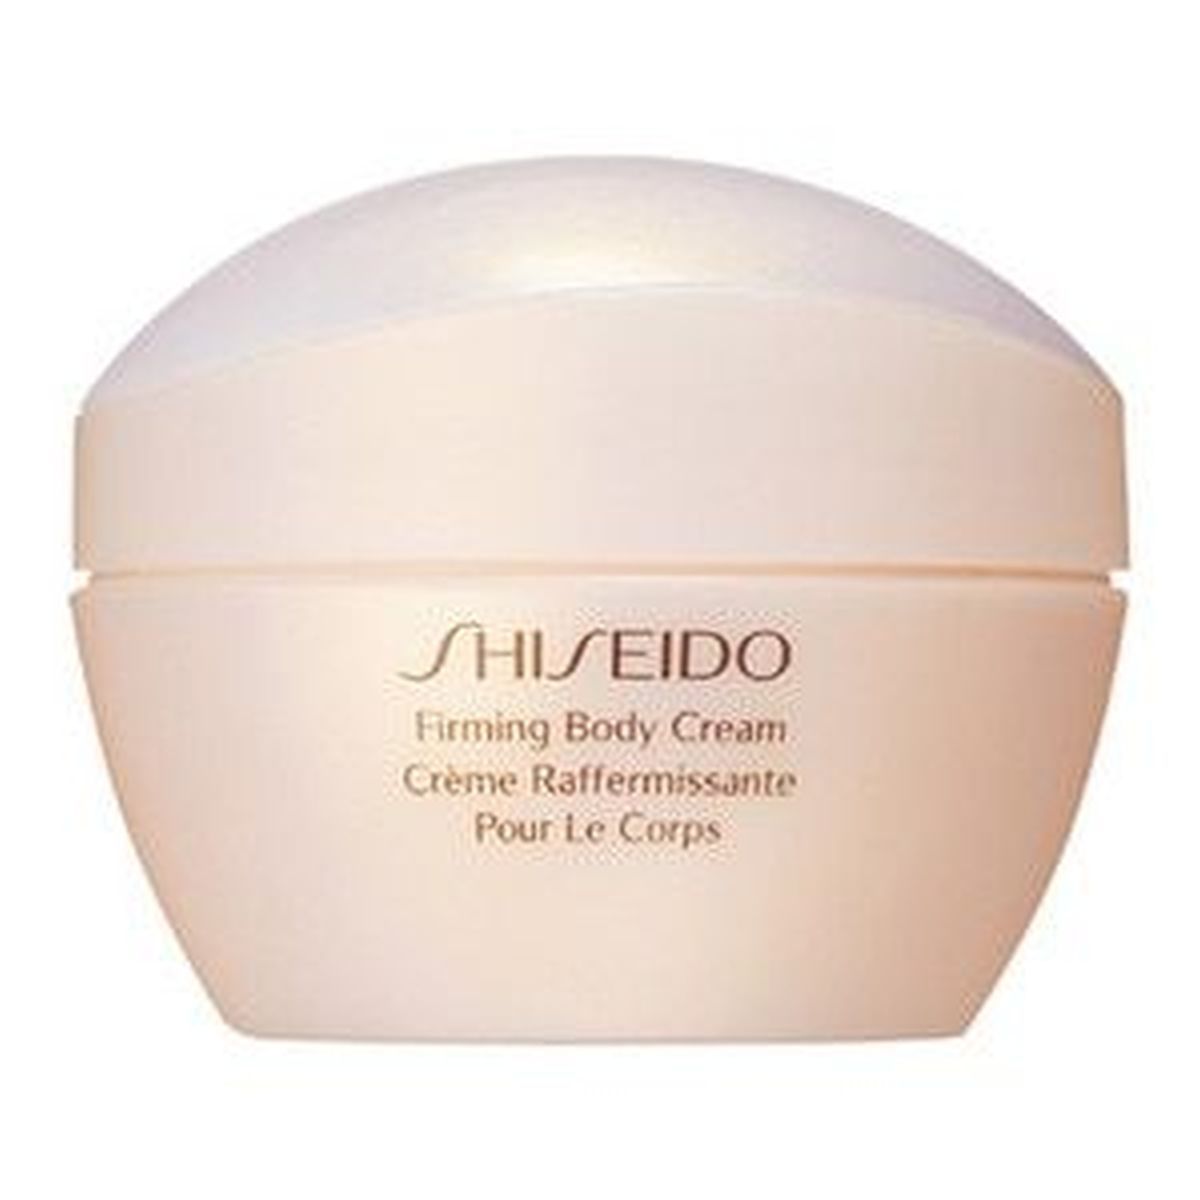 Firming Body Cream